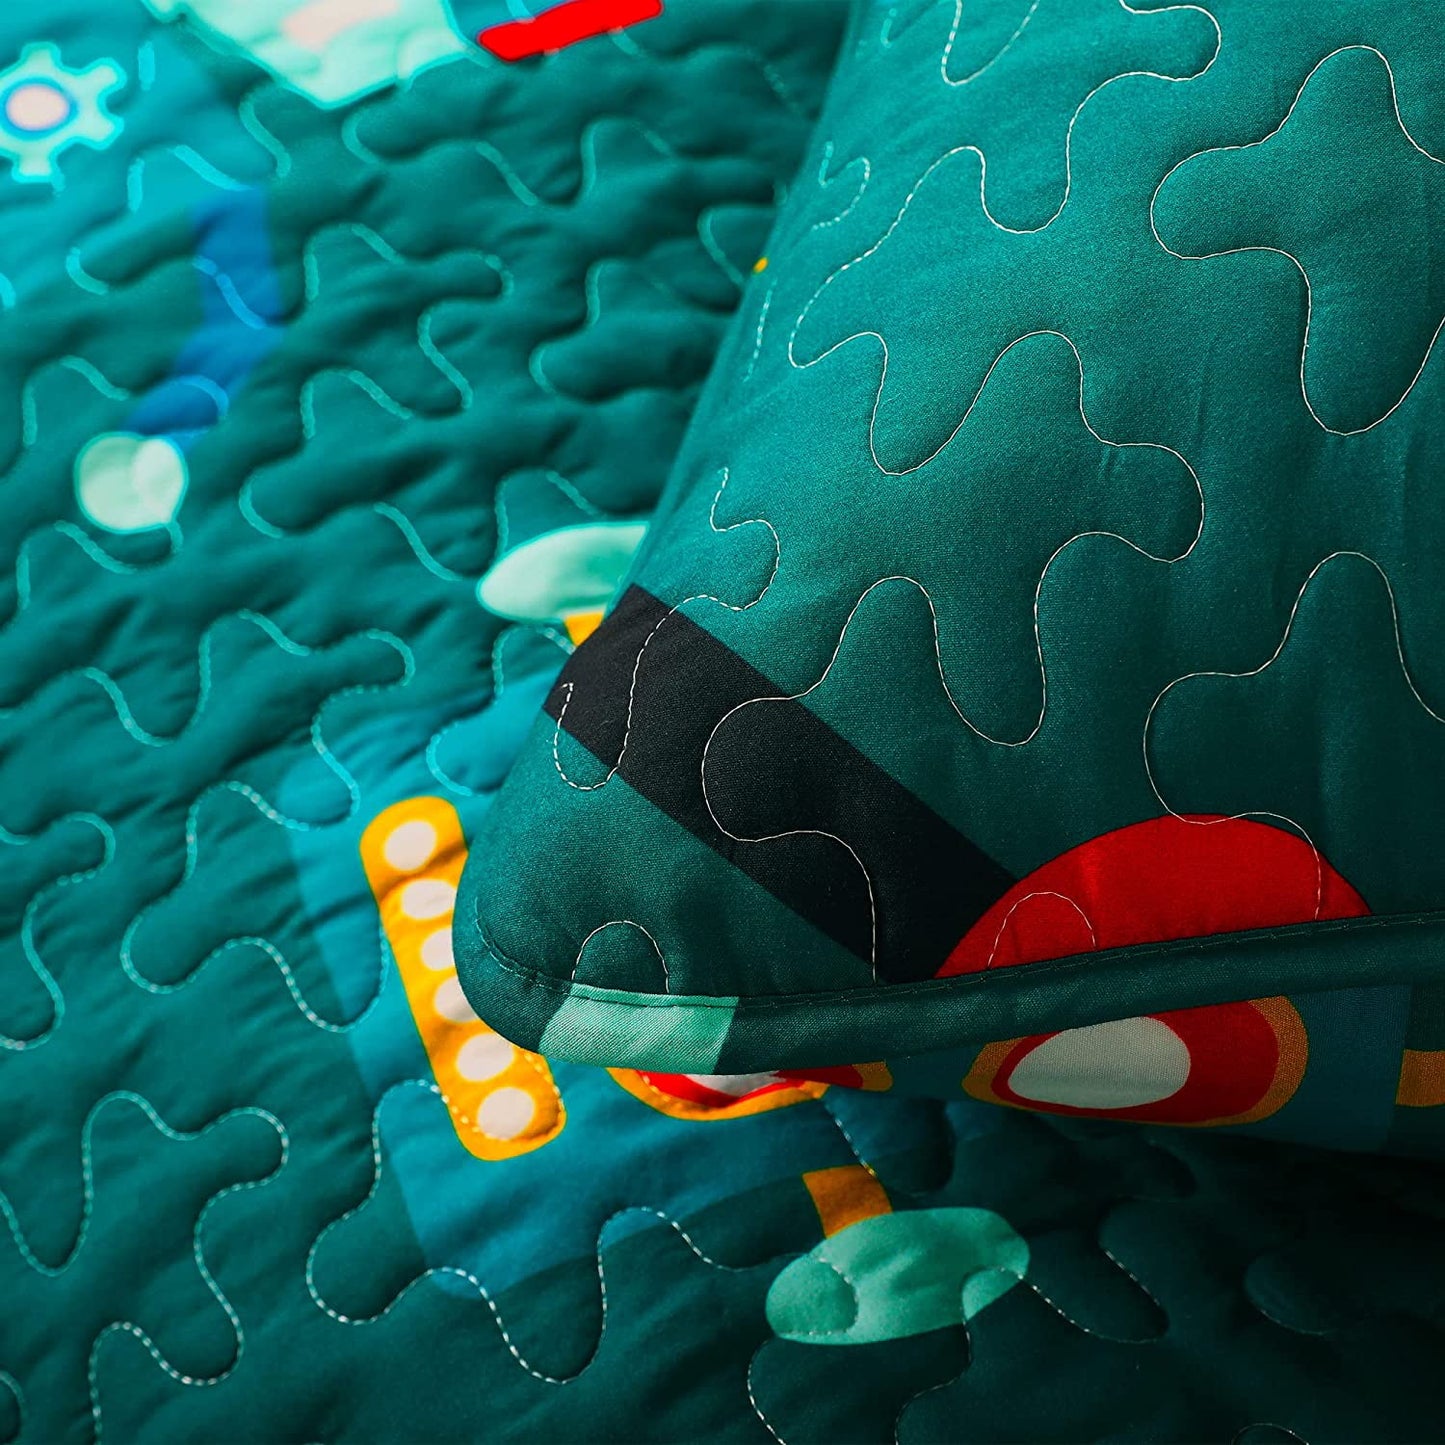 Whale Flotilla Cartoon Kids Quilt Set Twin Size, Soft Kids Bedding Set with Cute Robot Patterns, Microfiber Lightweight Bedspread Coverlet for Boys and Girls